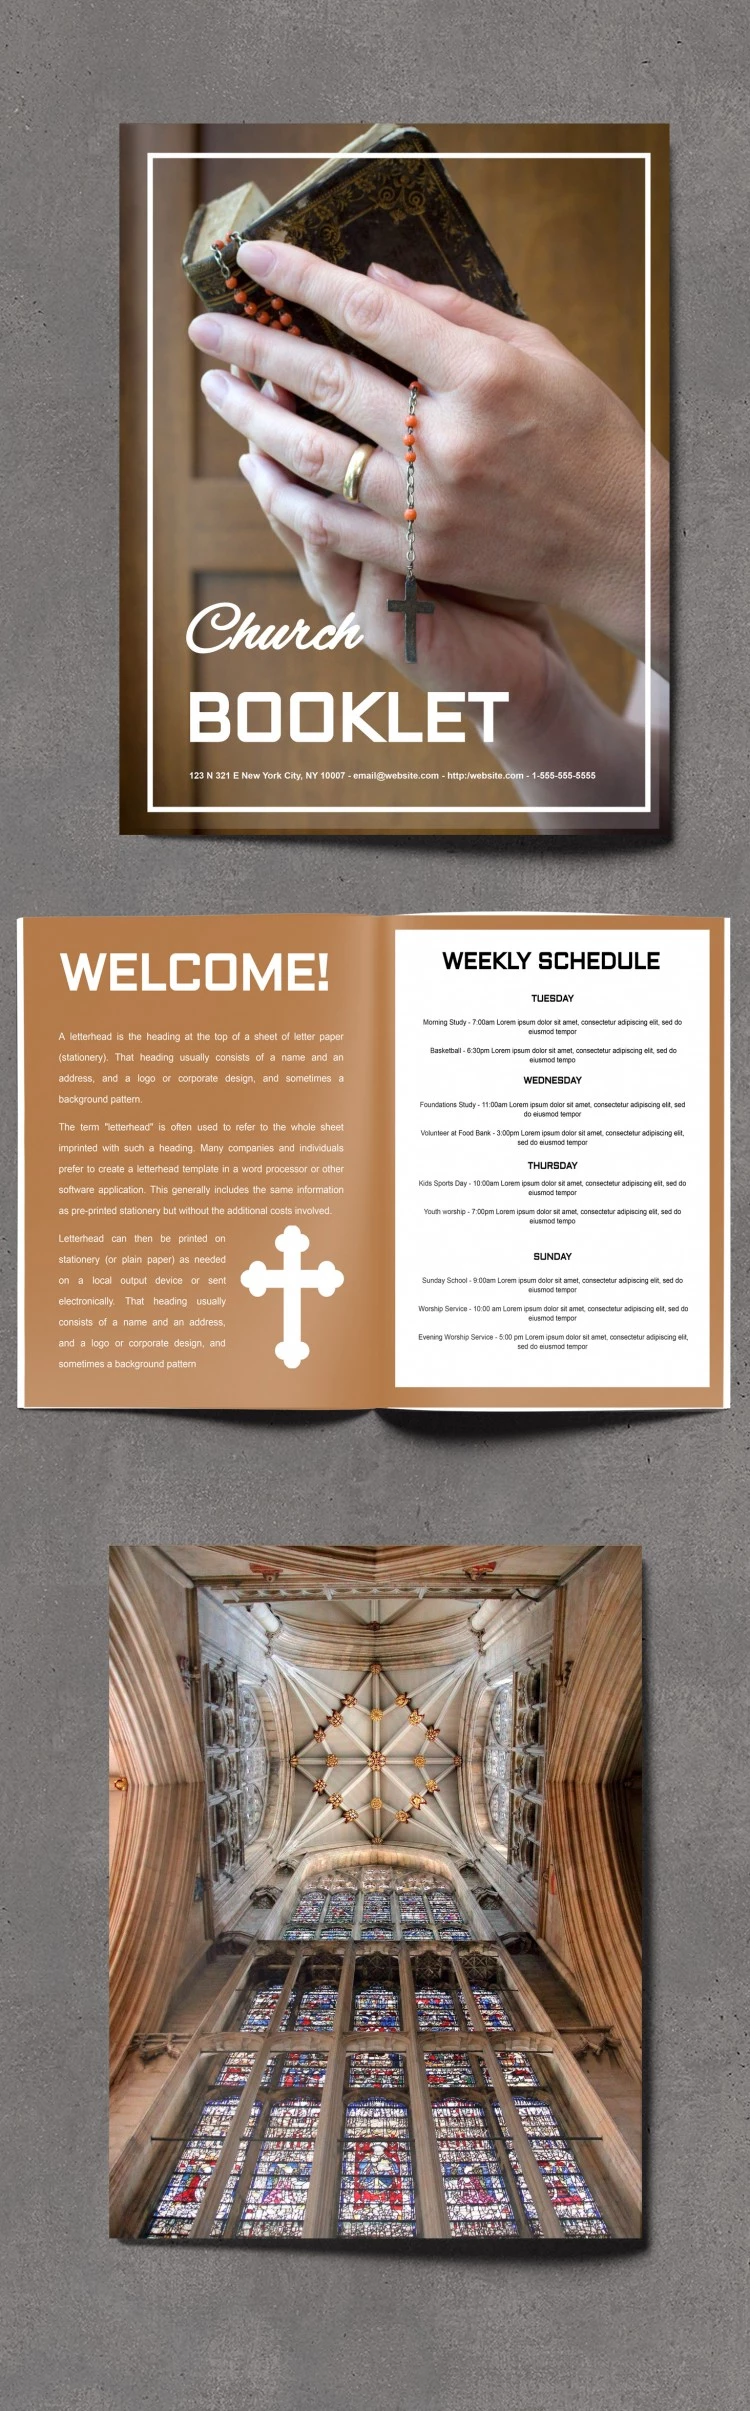 Maravilhoso Folheto da Igreja - free Google Docs Template - 10061838